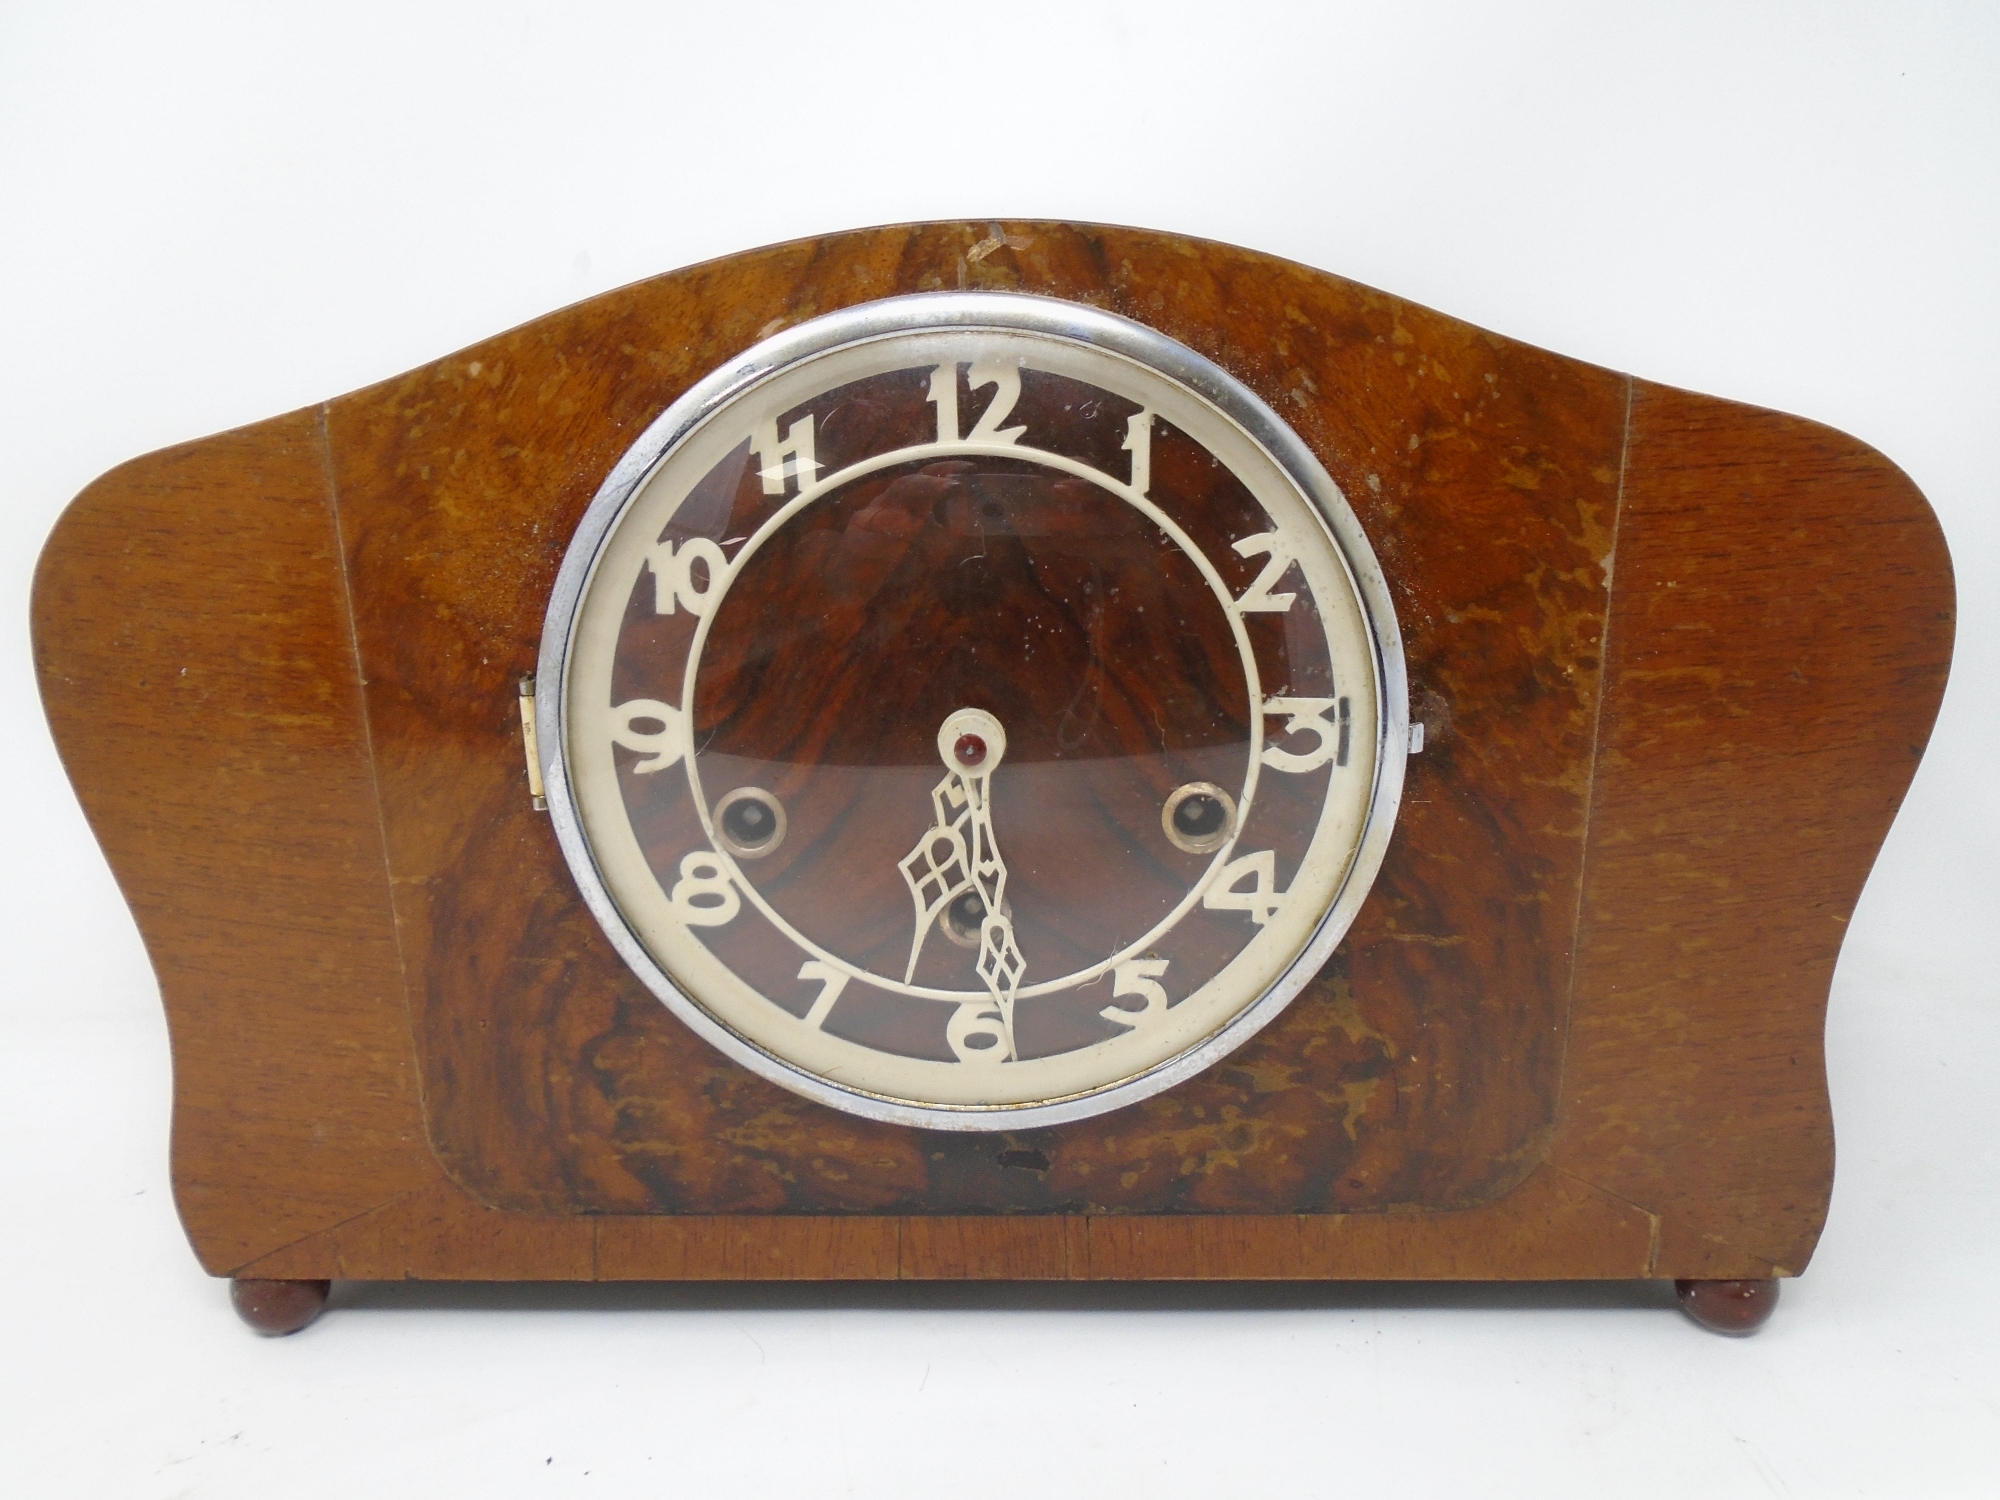 An early 20th century mantel clock.